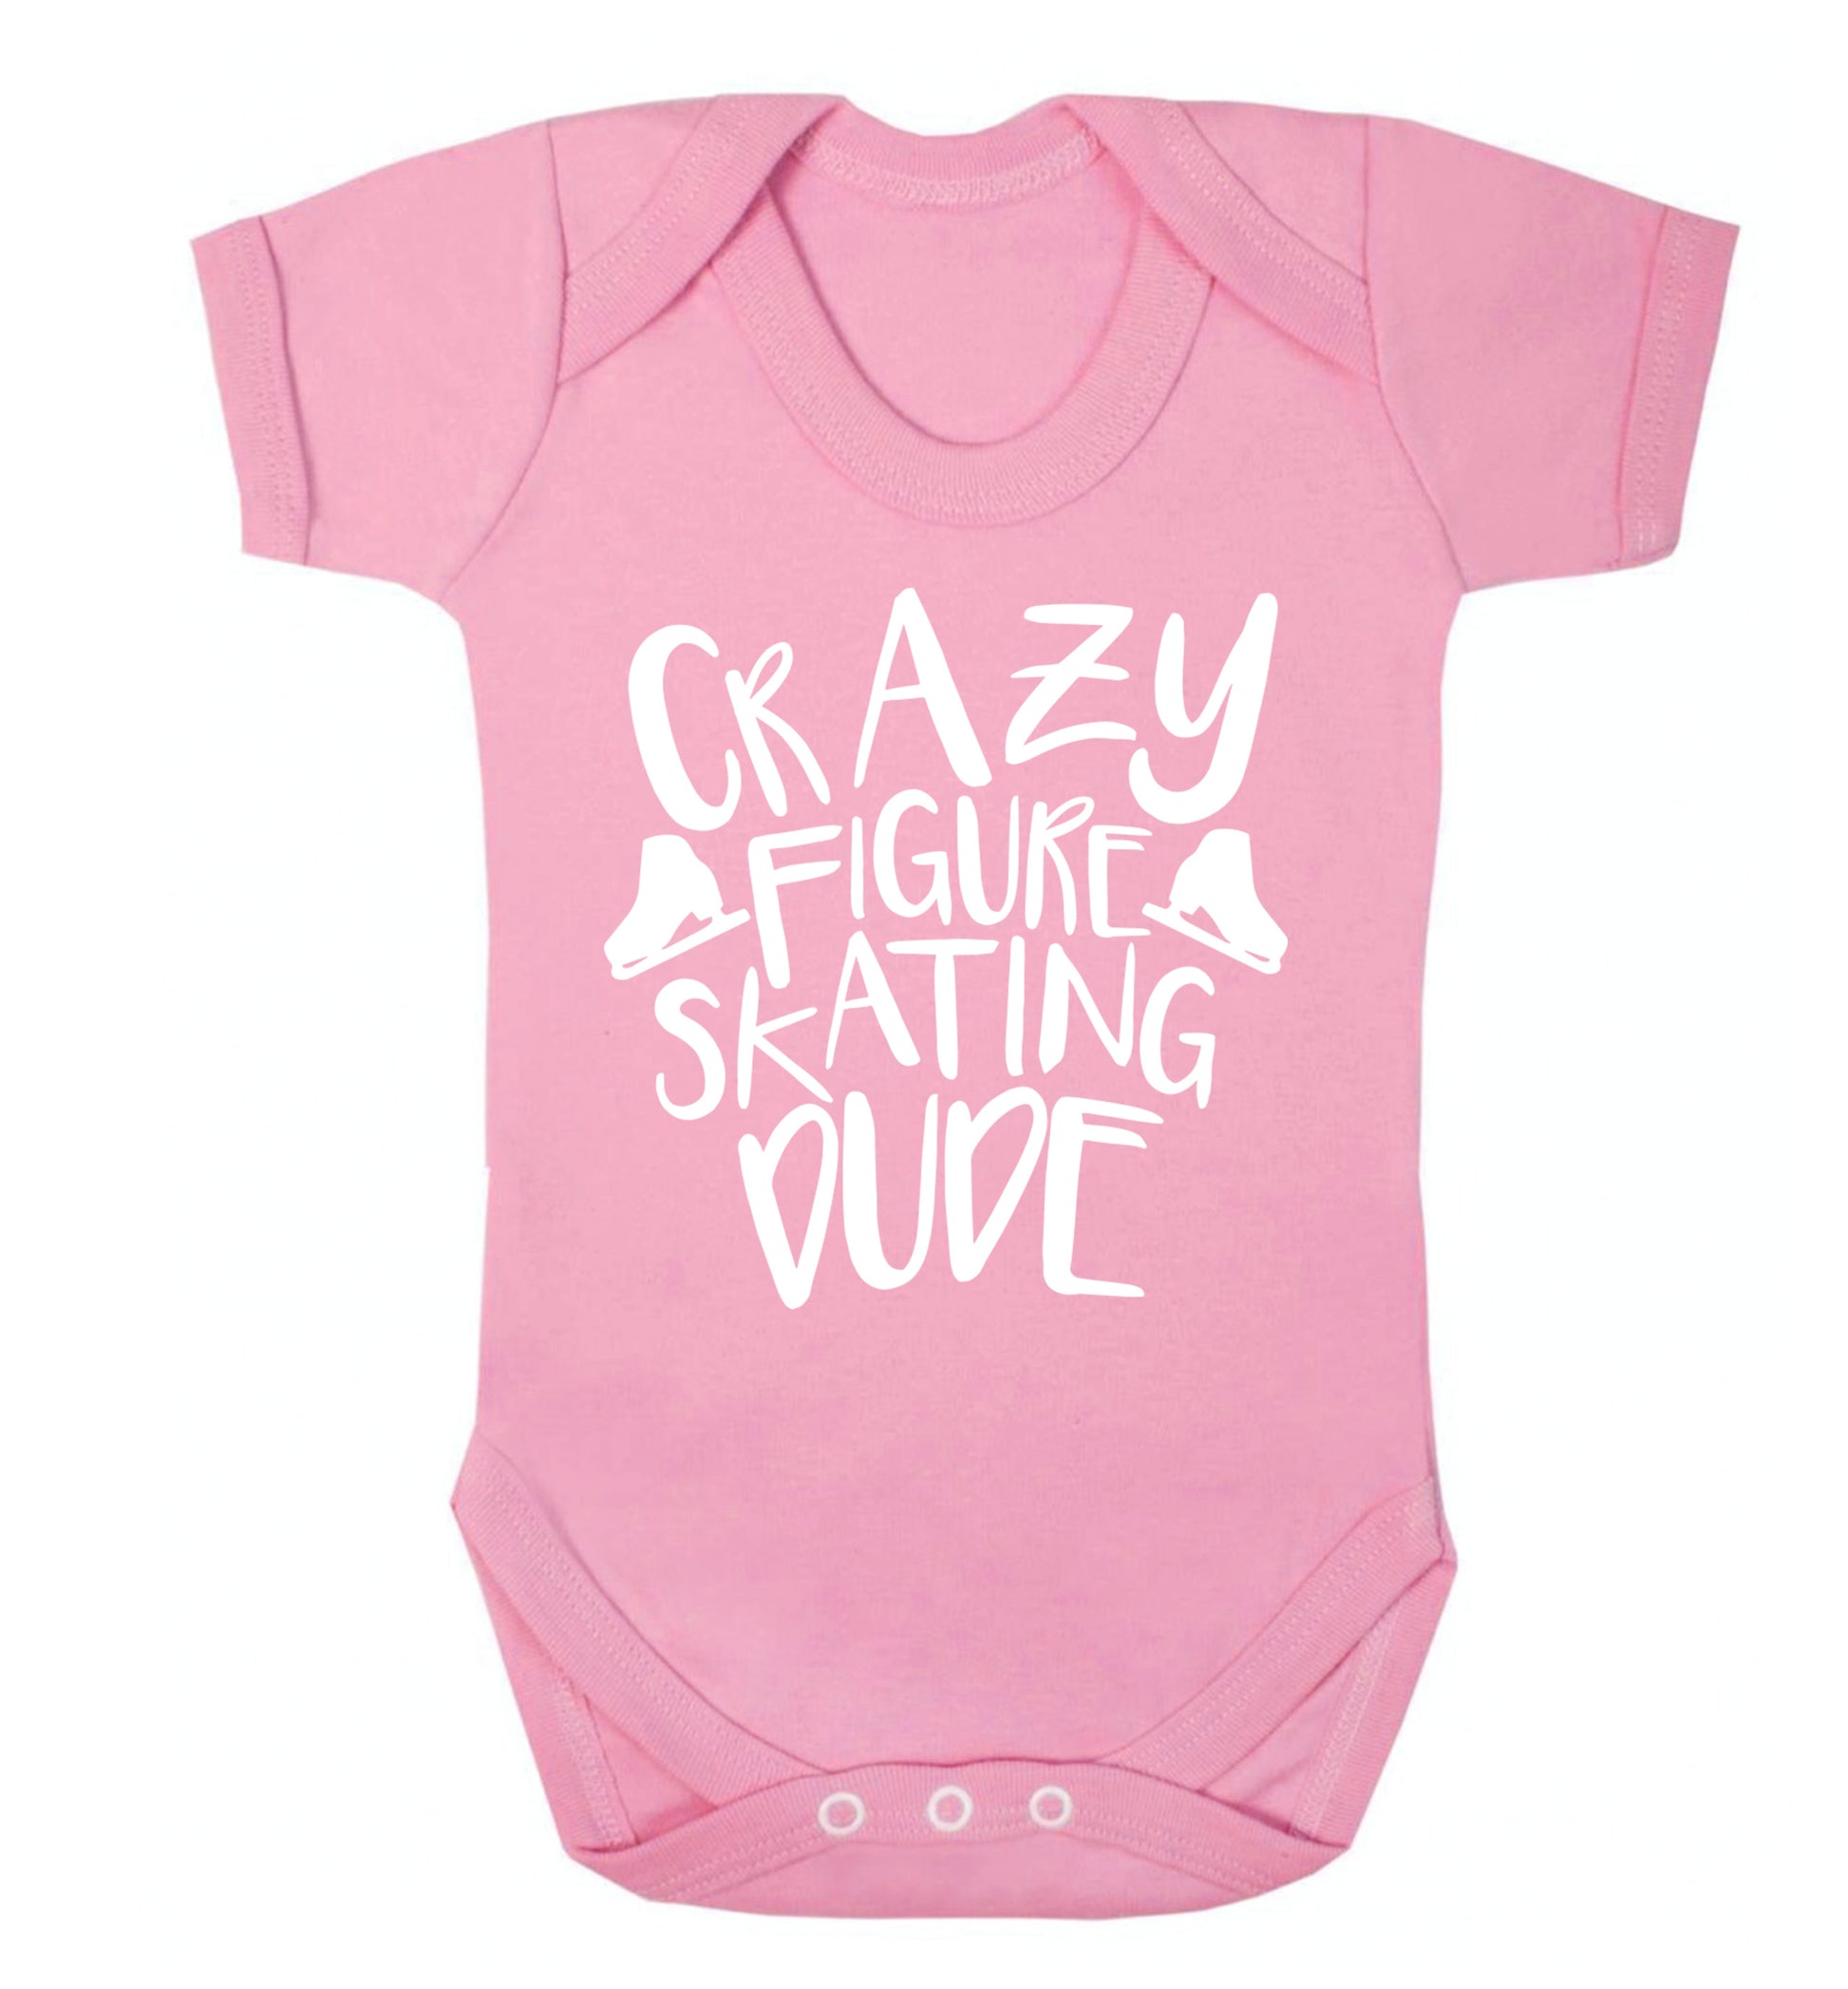 Crazy figure skating dude Baby Vest pale pink 18-24 months